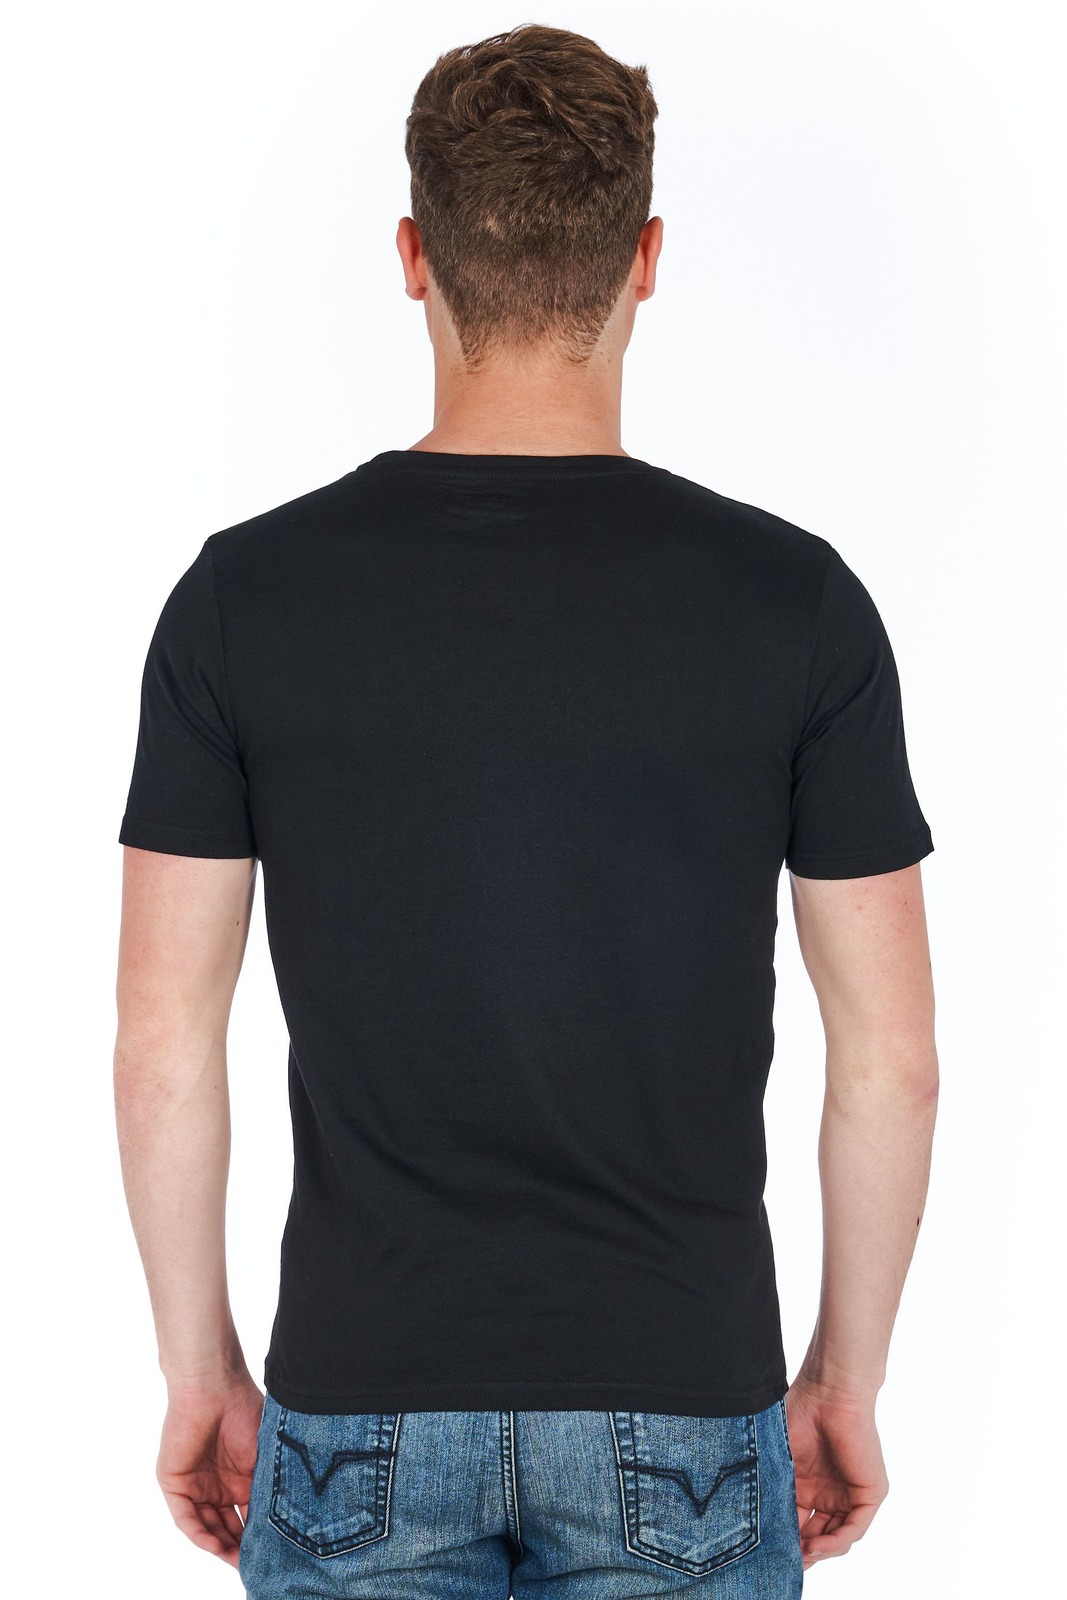 Jeckerson Black T-shirts for Men - CLASSIC